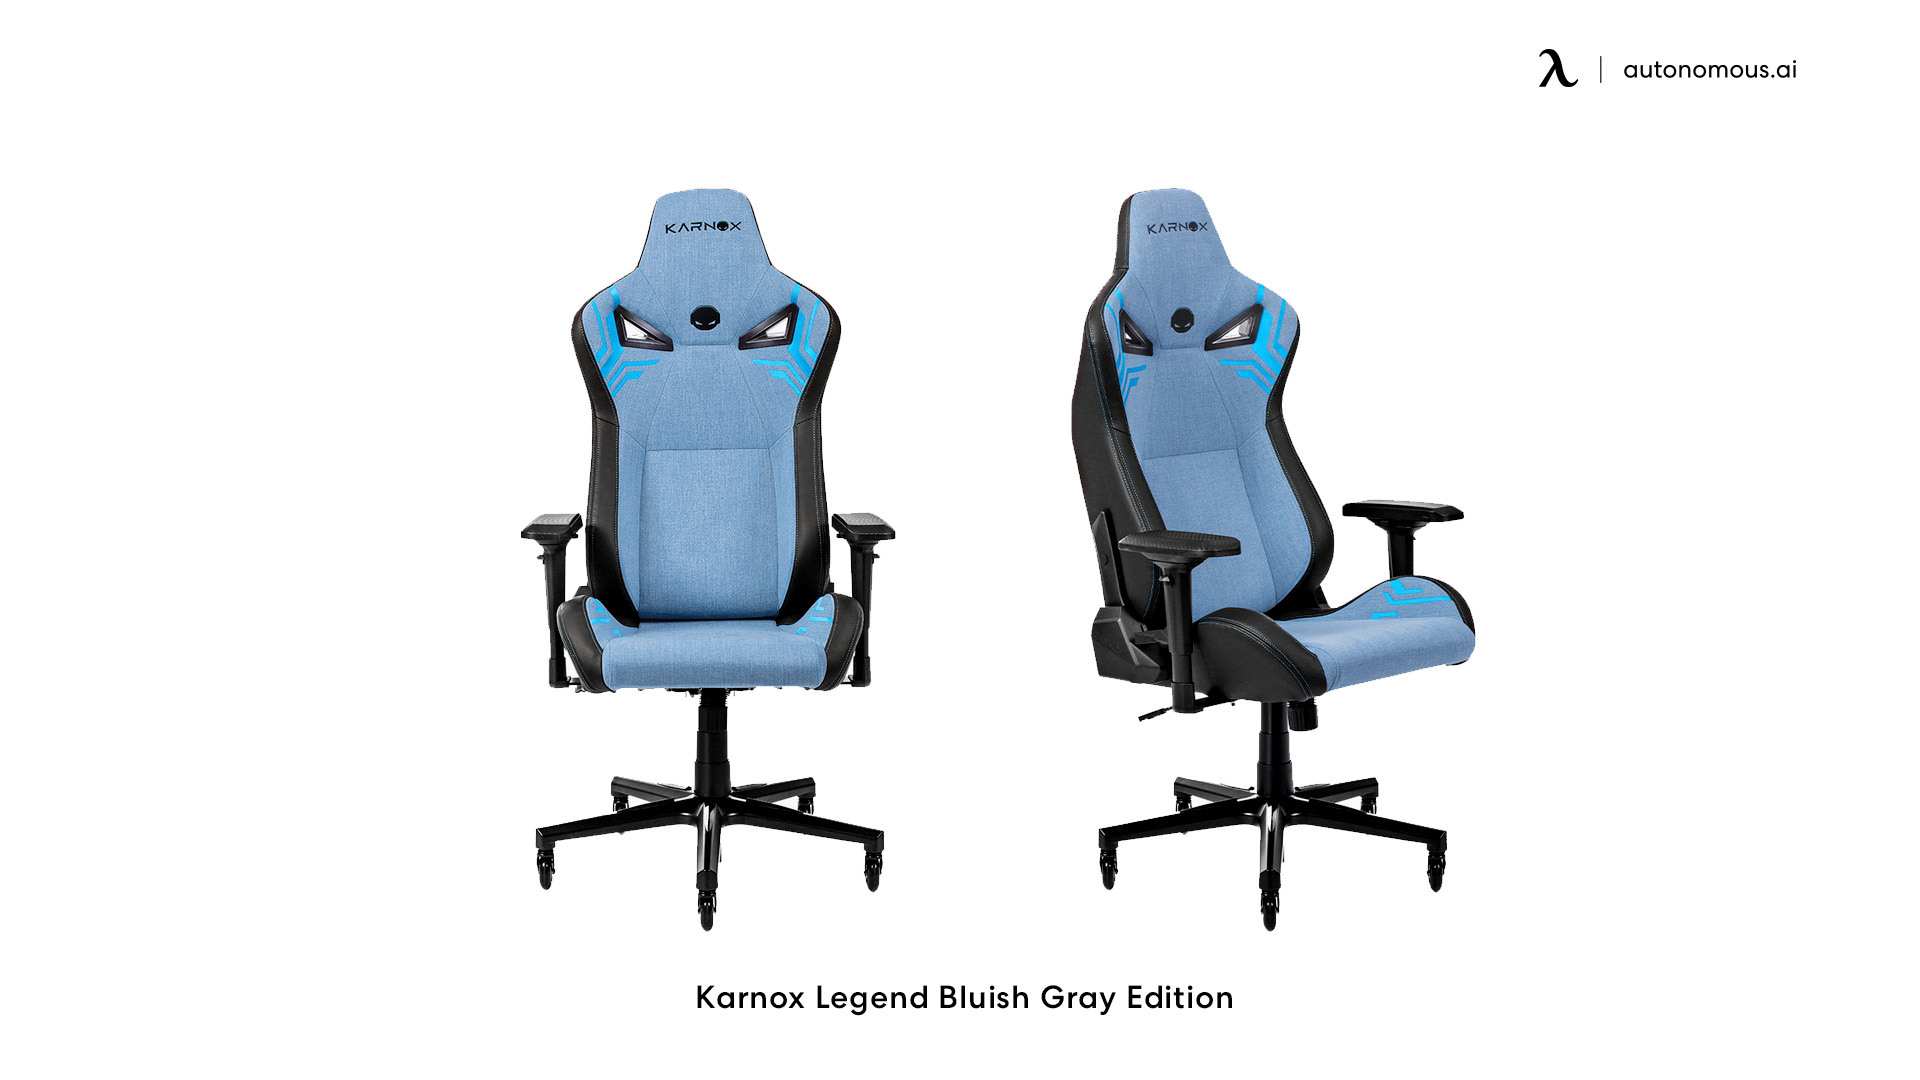 Karnox Legend Bluish Gray Edition pc chair